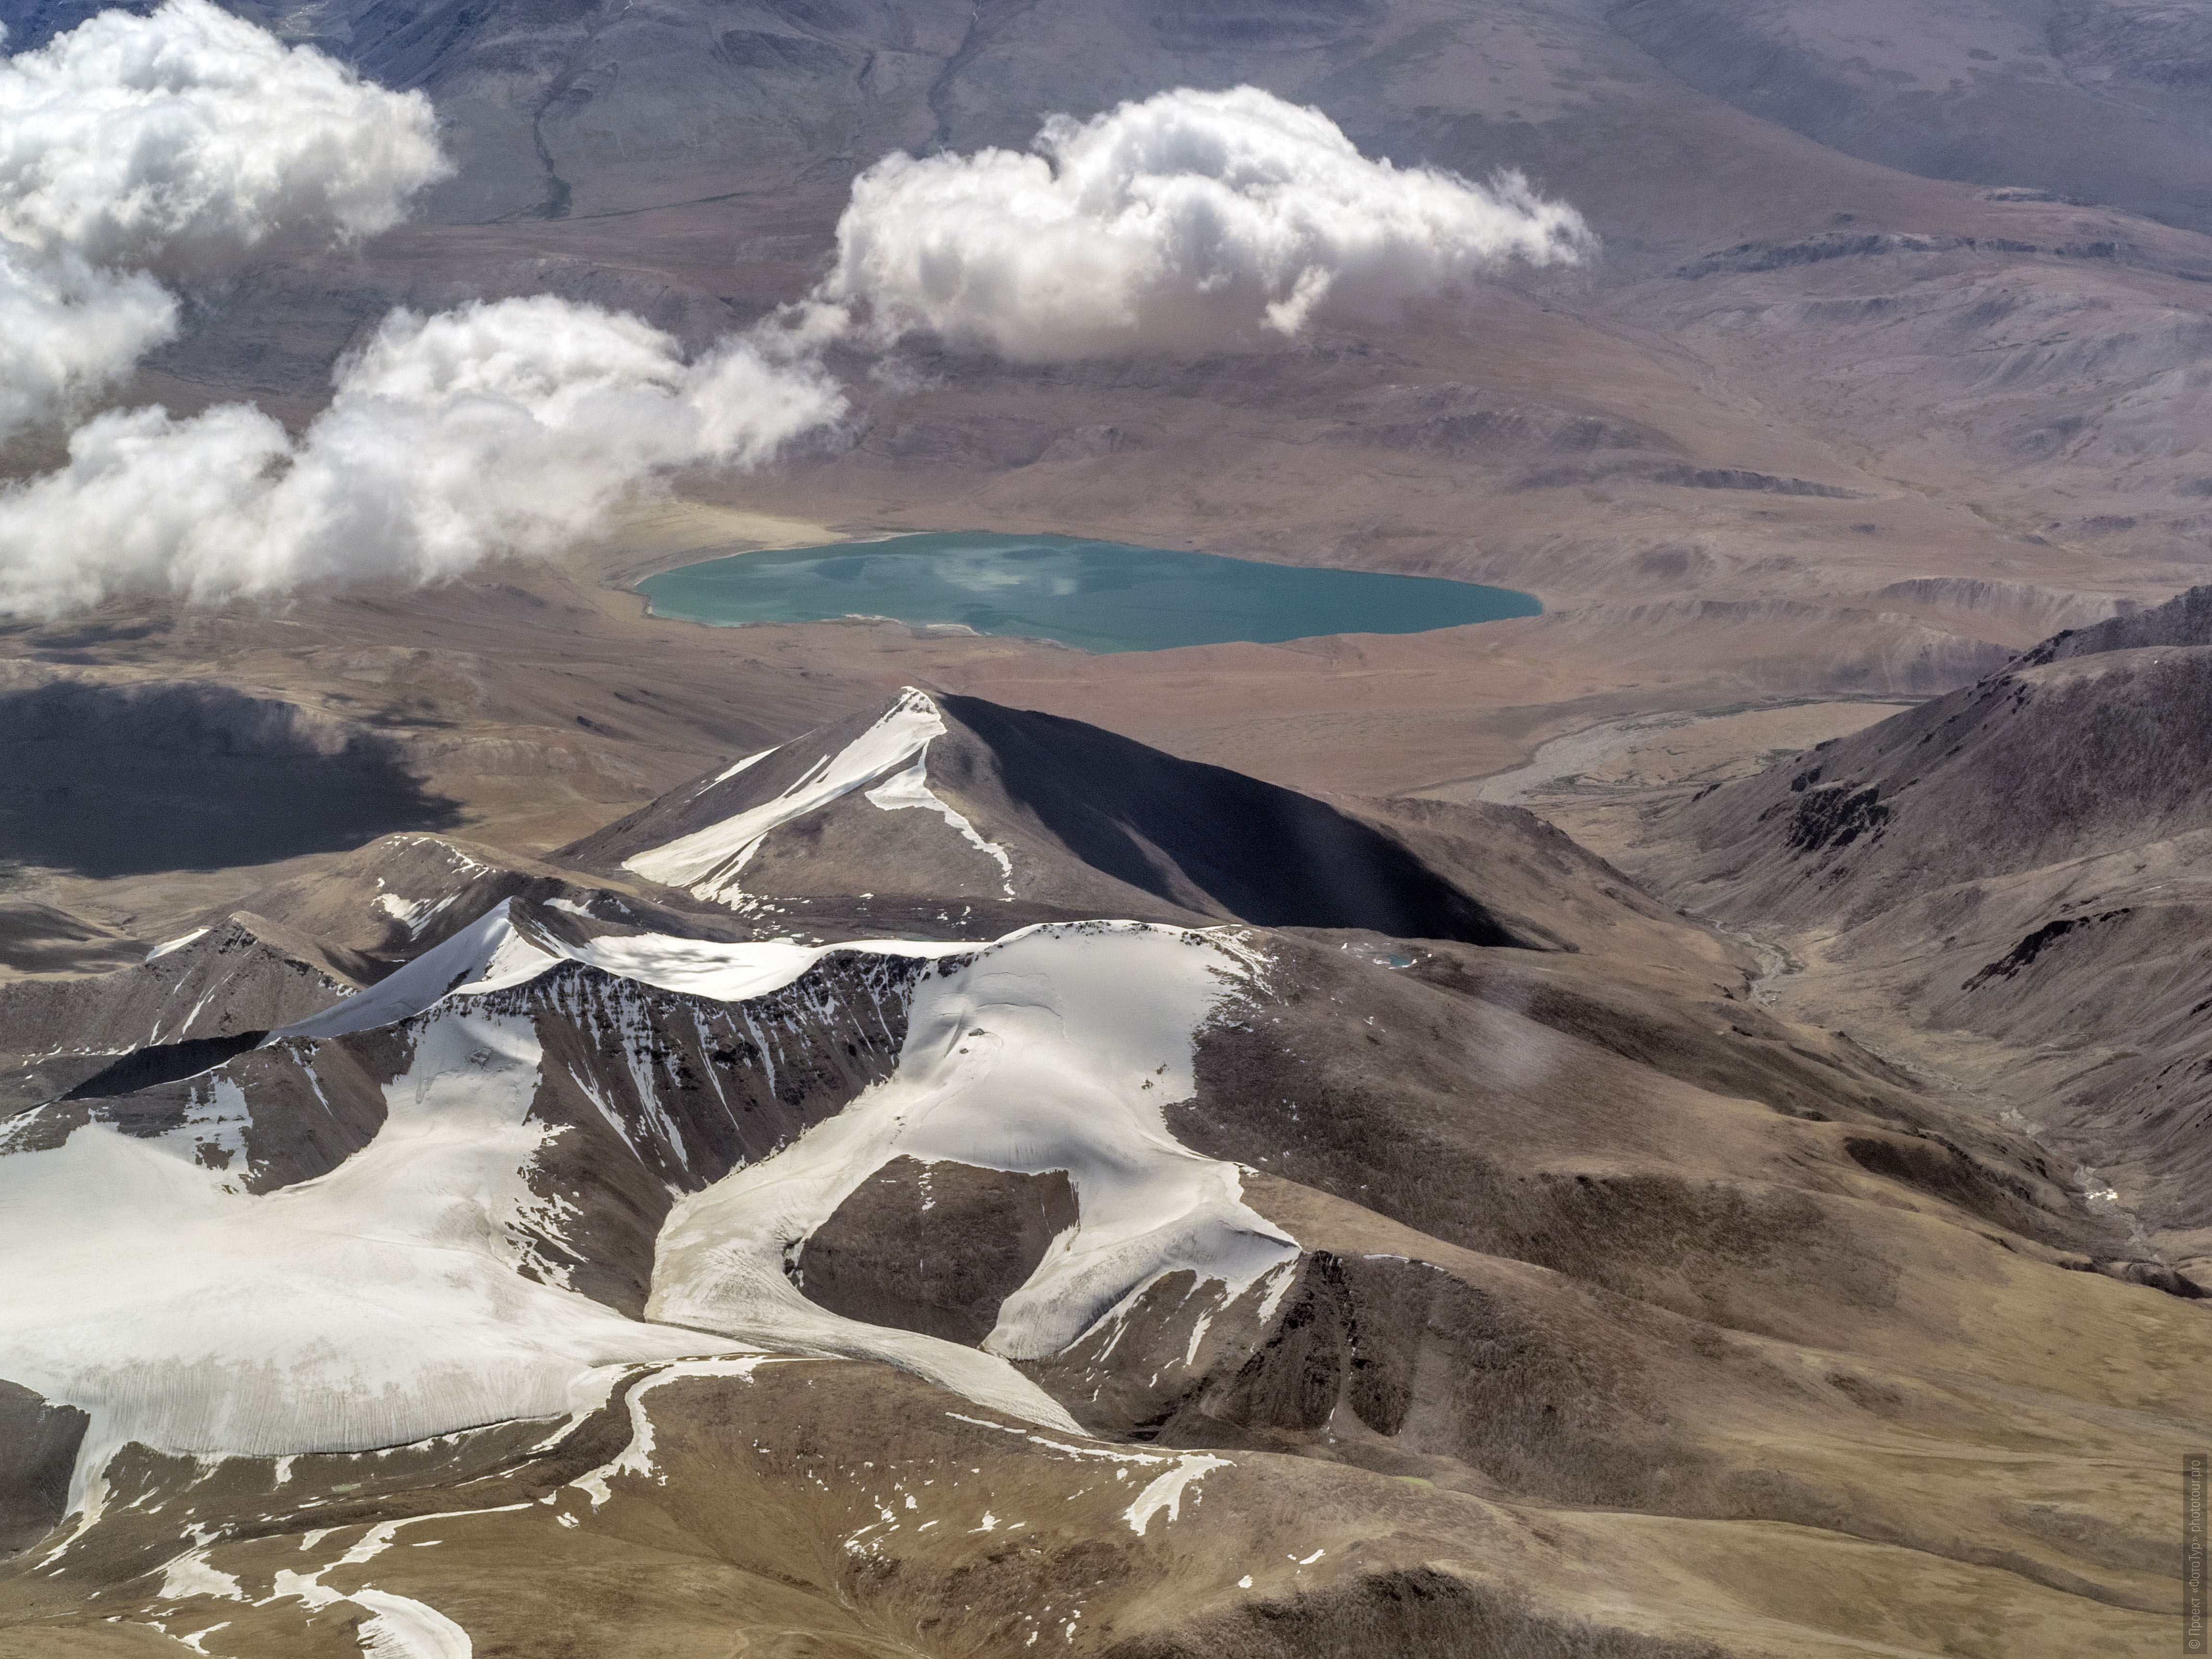 Lake Chiagar Tso, Ladakh womens tour, August 31 - September 14, 2019.